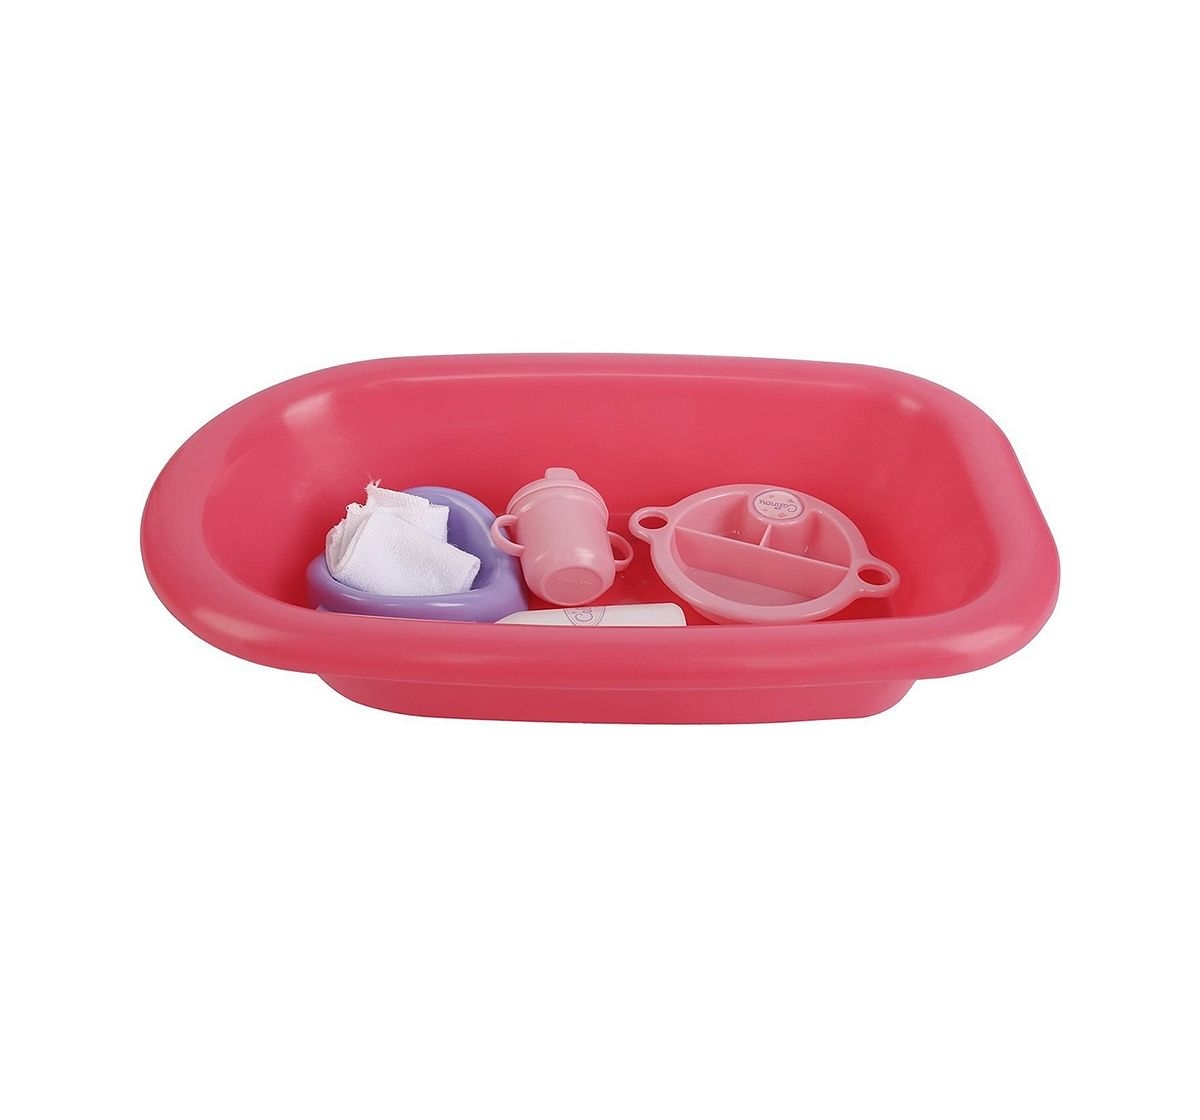 Baby ELLIE Bathtime Bathtime Set (Pink/Purple) Dolls & Accessories for Kids age 3Y+ (Pink)